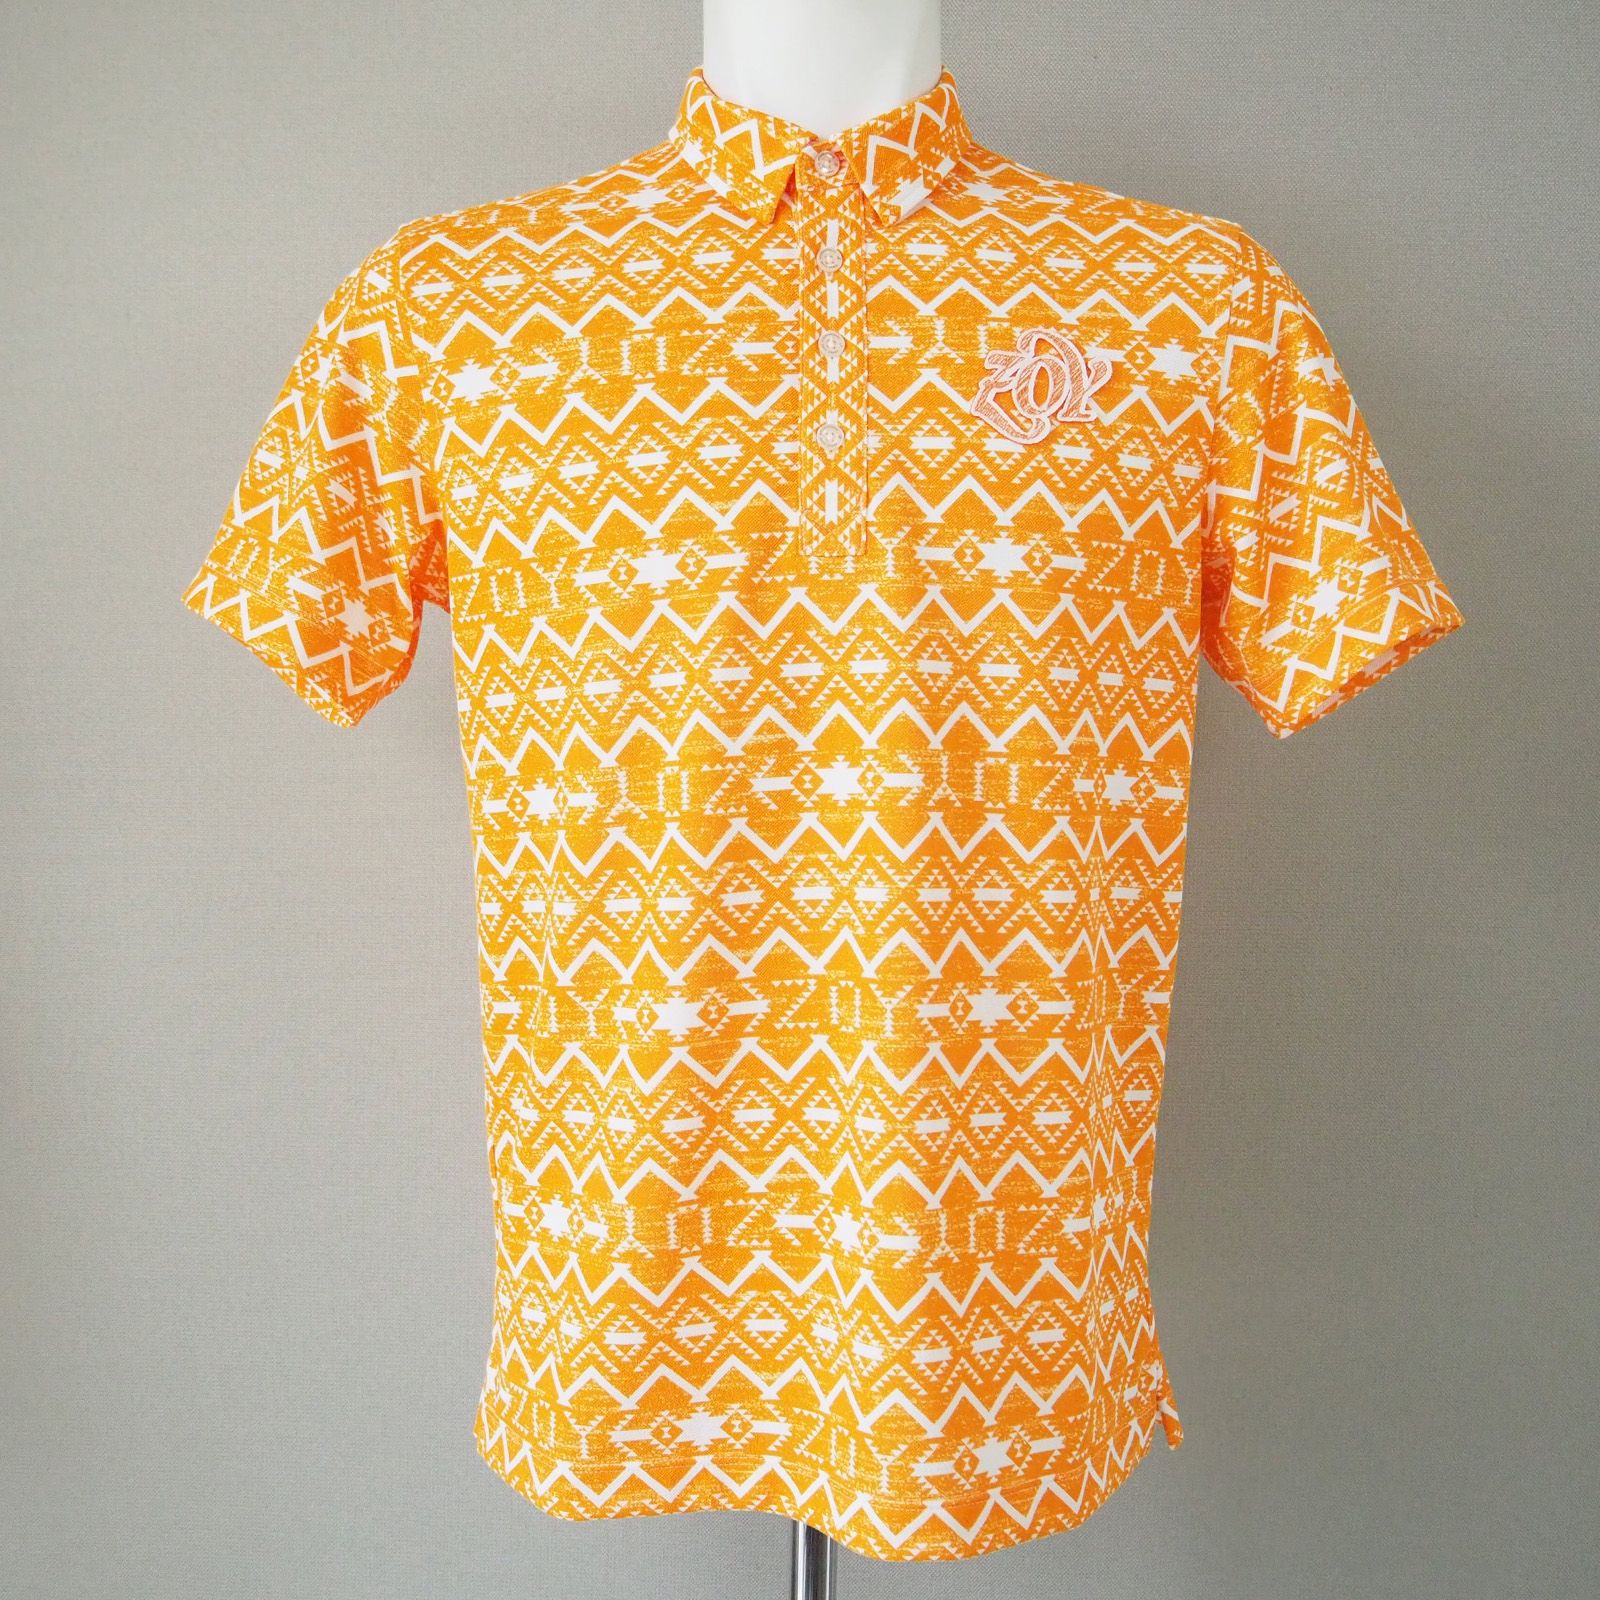 ZOY - NATIVEプリント 半袖 ポロシャツ | オレンジ | メンズ | ゴルフ